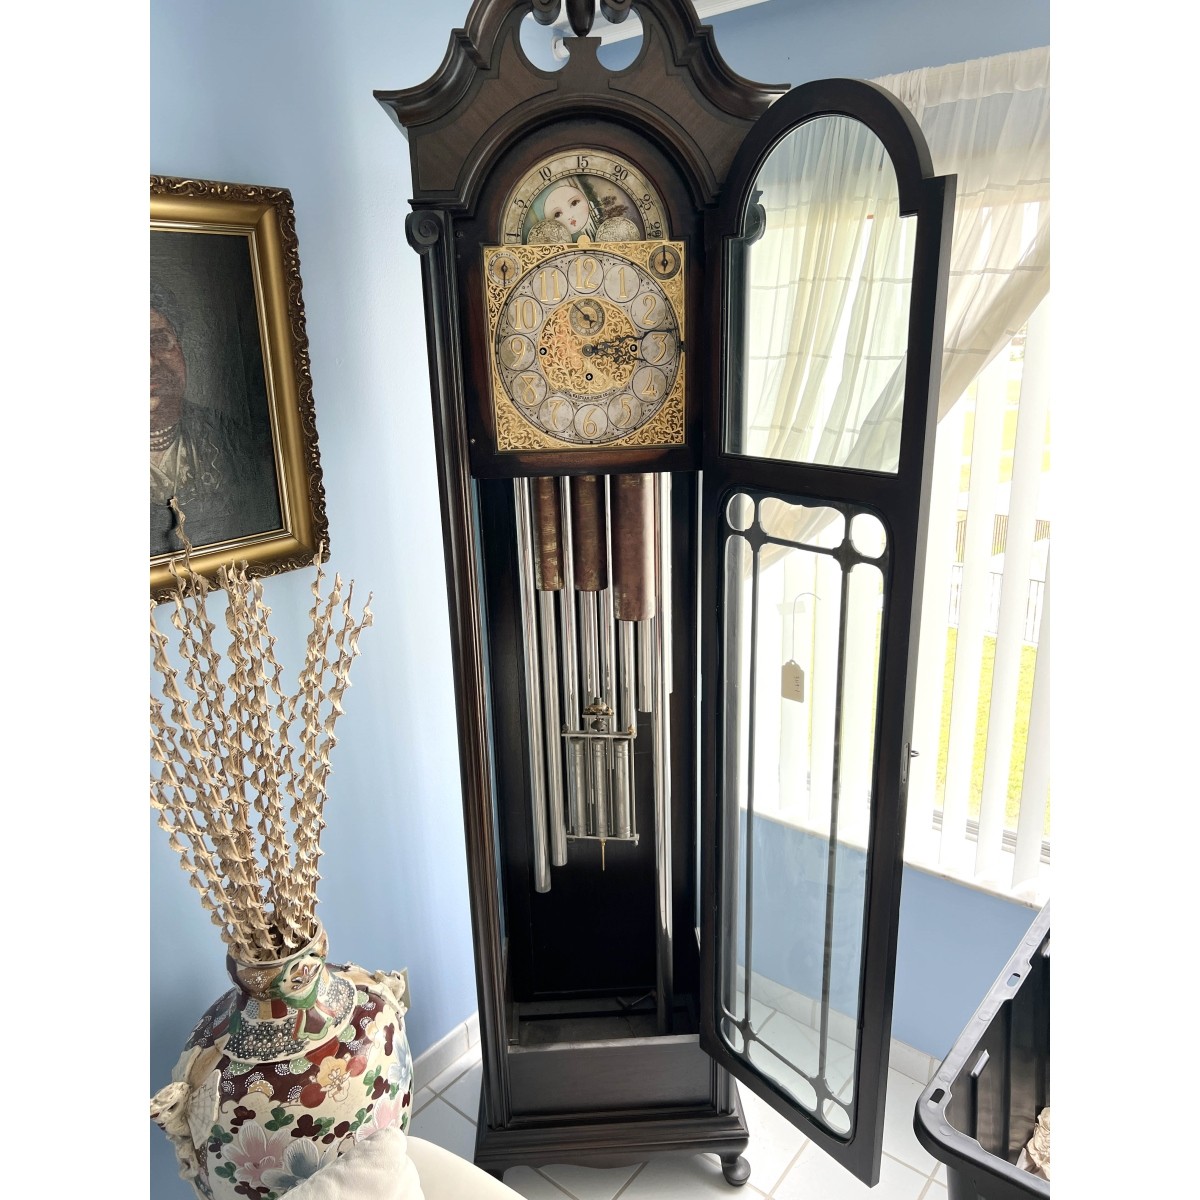 Waltham Clock Co. Grandfather Clock